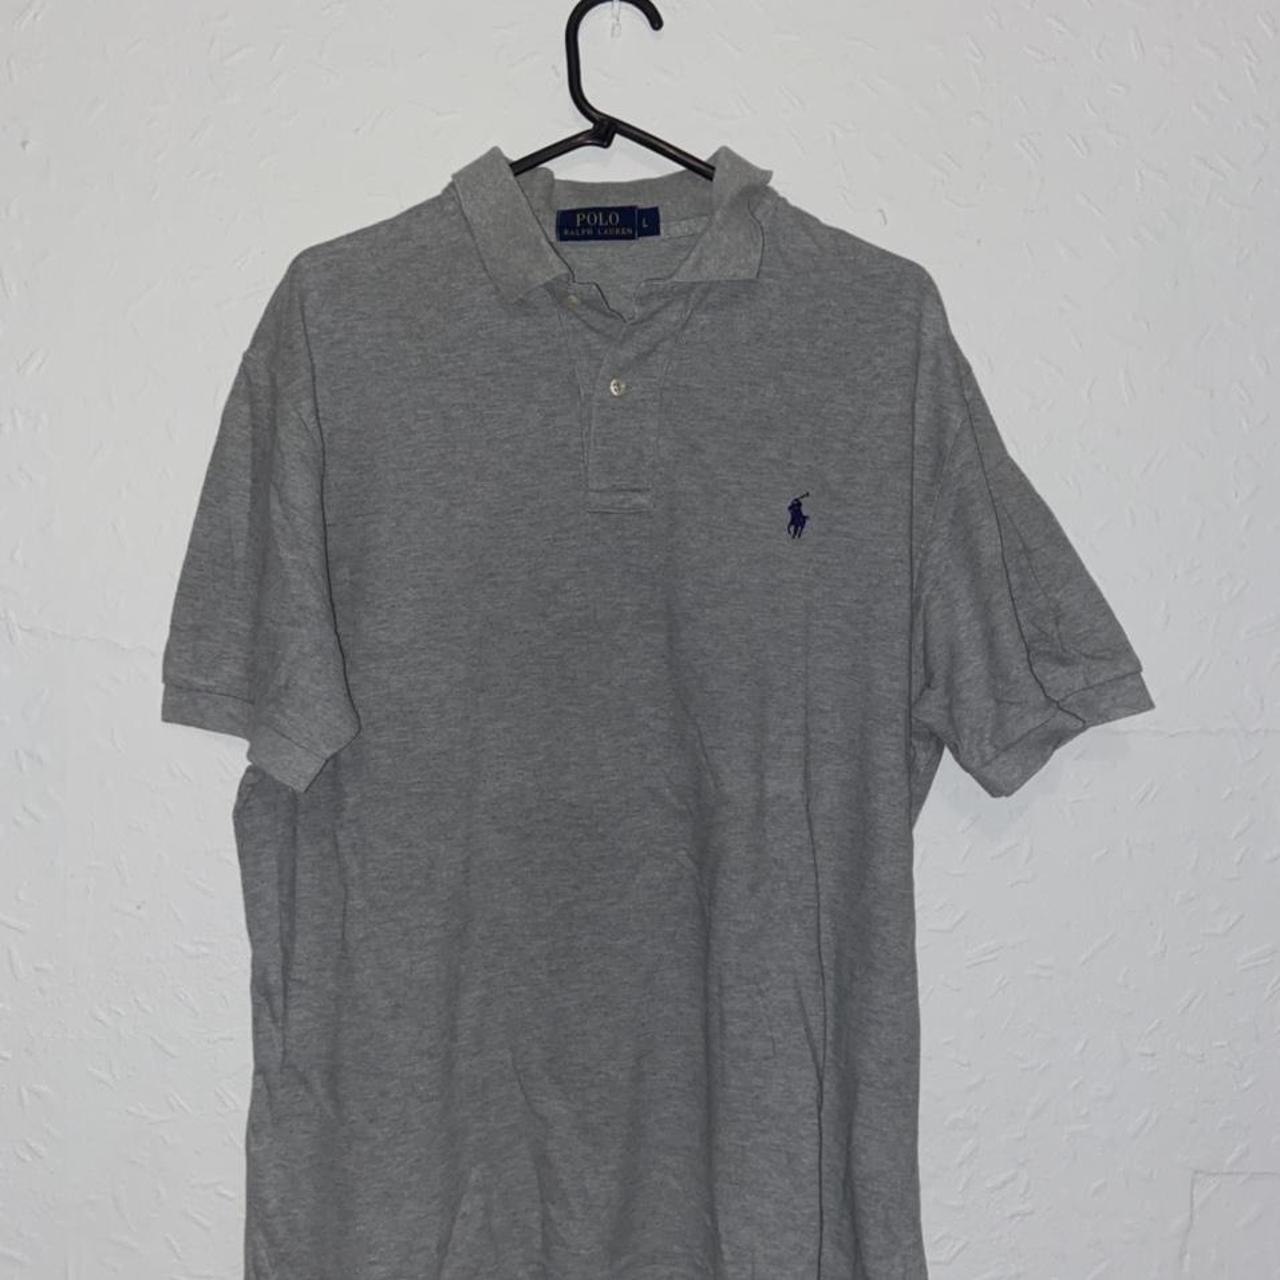 Grey Polo Ralph Lauren polo shirt - Depop